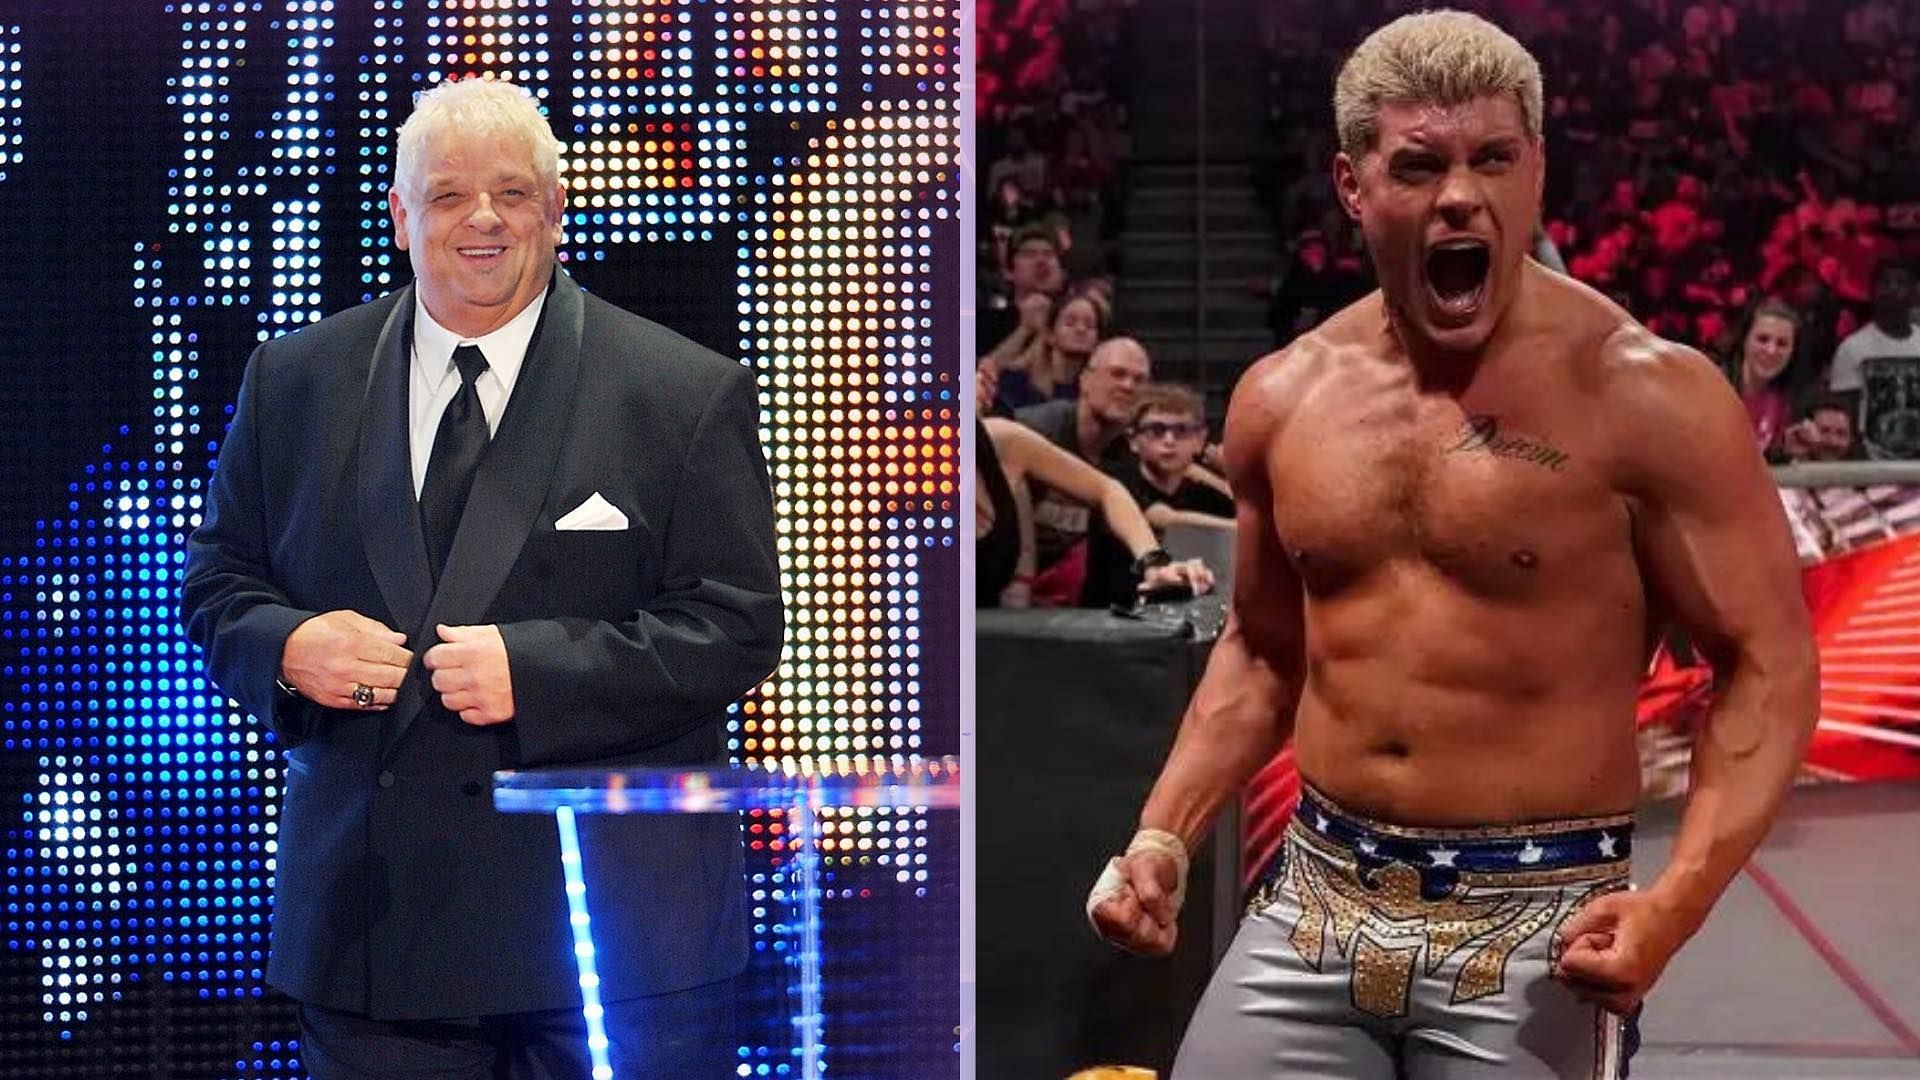 Cody Rhodes attacks star suddenly backstage; enormous brawl on WWE RAW